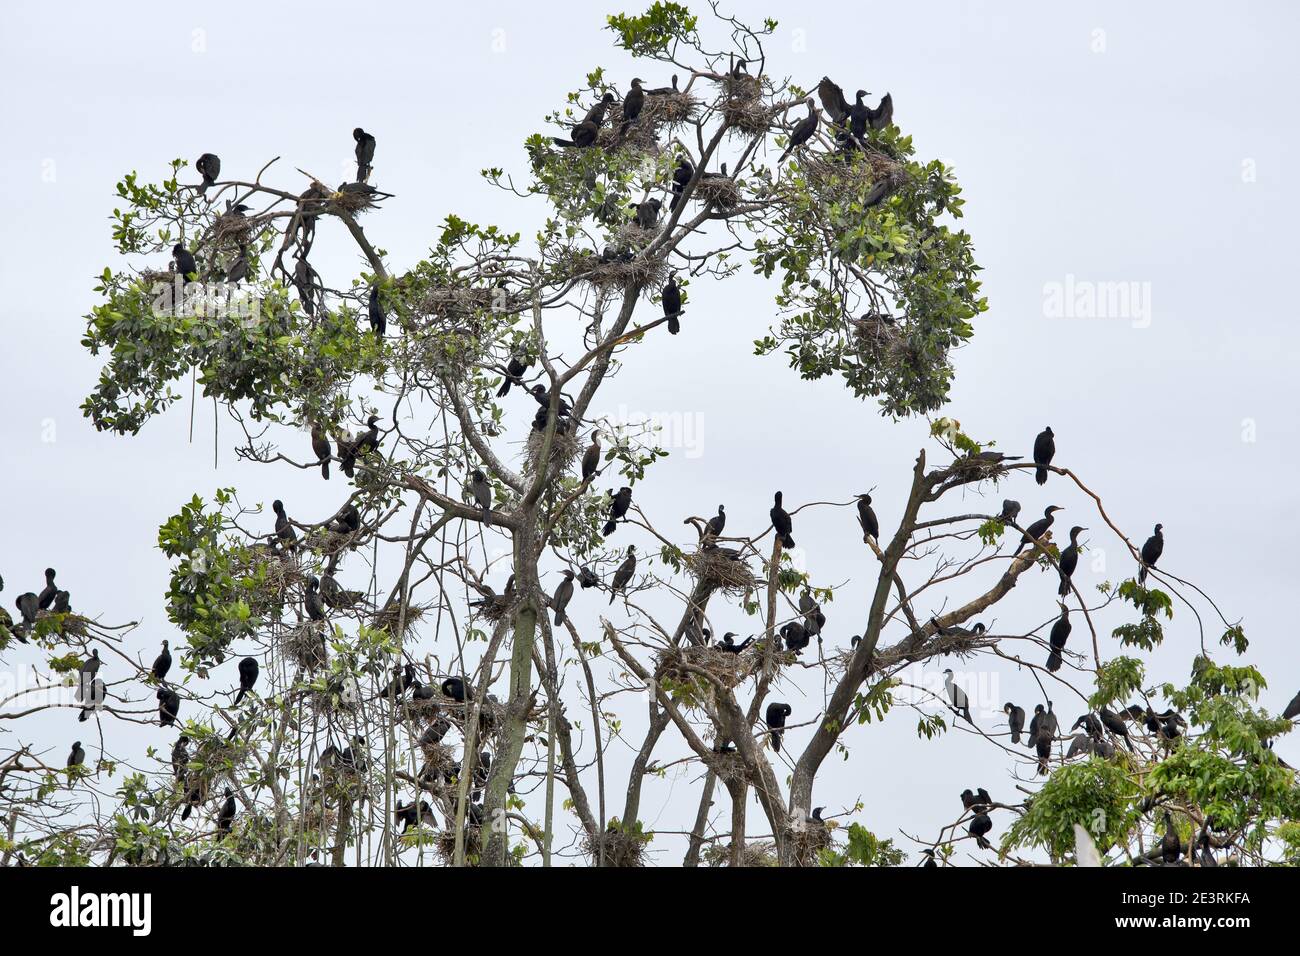 Caribbean, Guatemala, Central America: tons of cormorants on tree Stock Photo